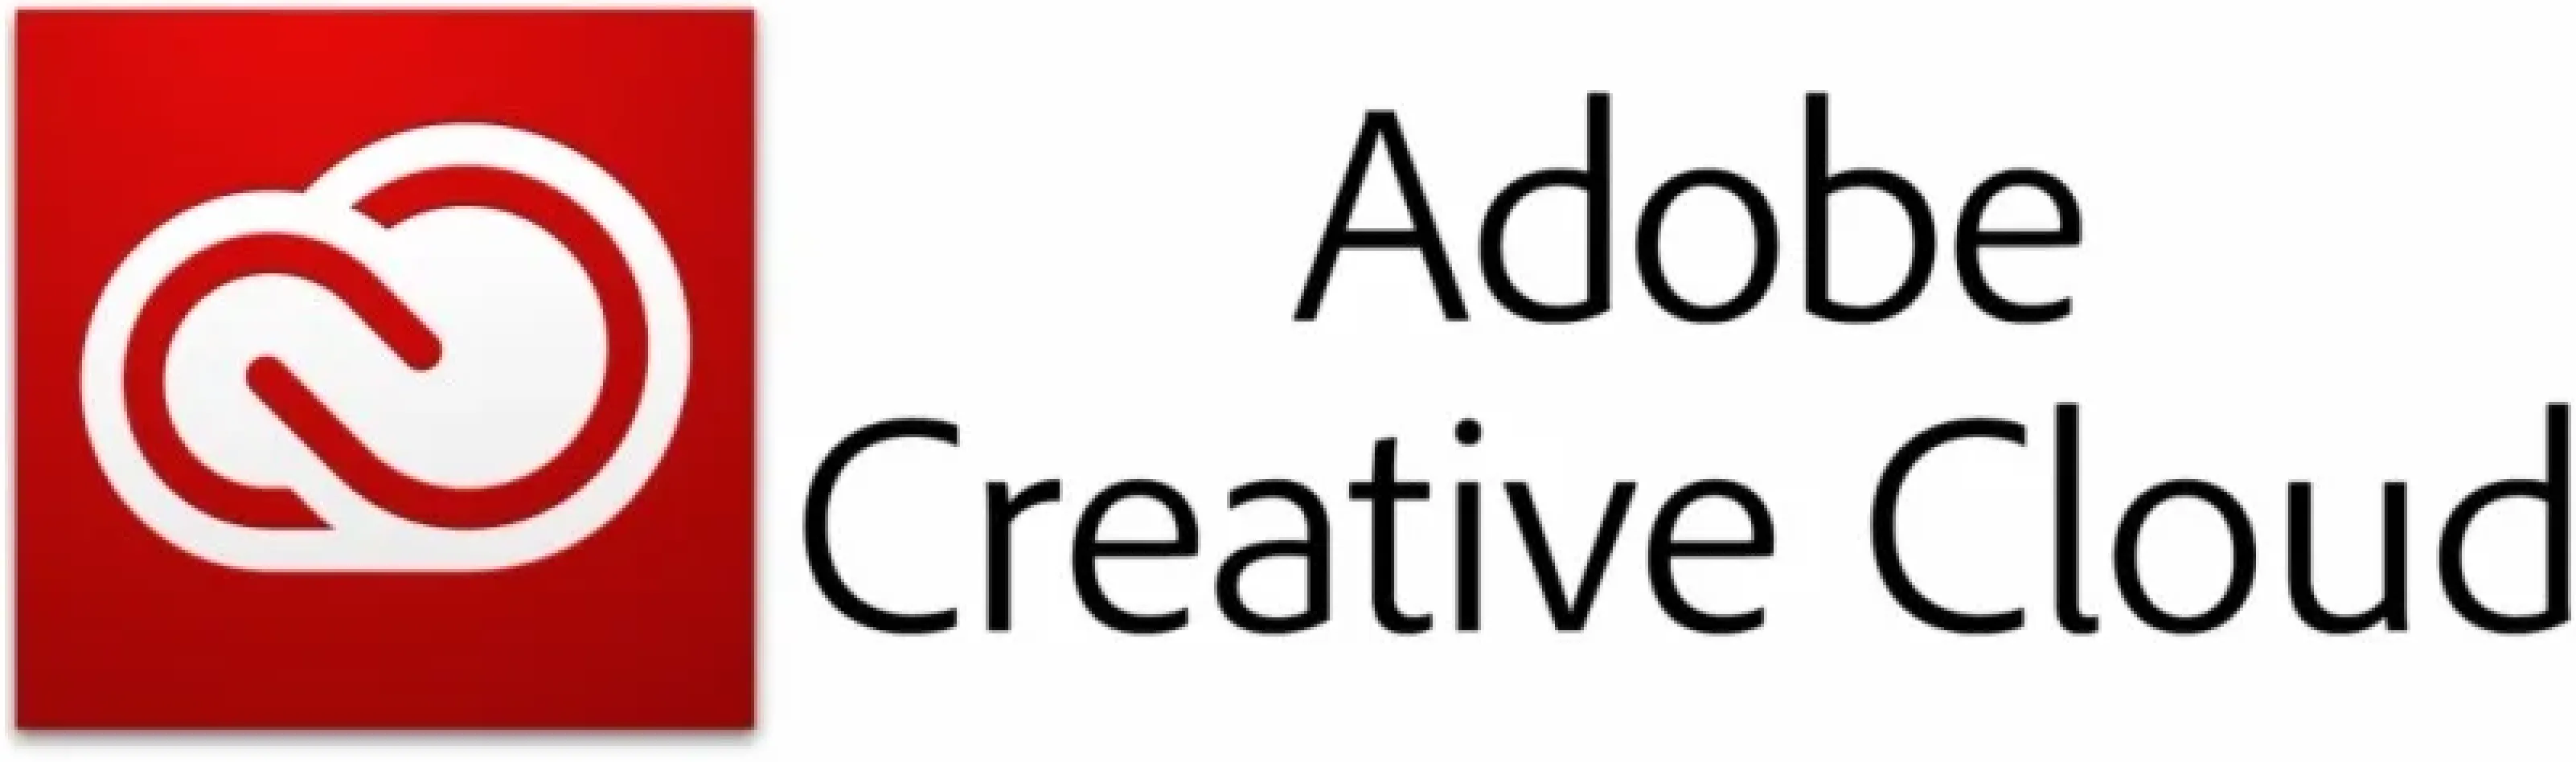 SAML Authentication: Adobe Creative cloud SSO solution